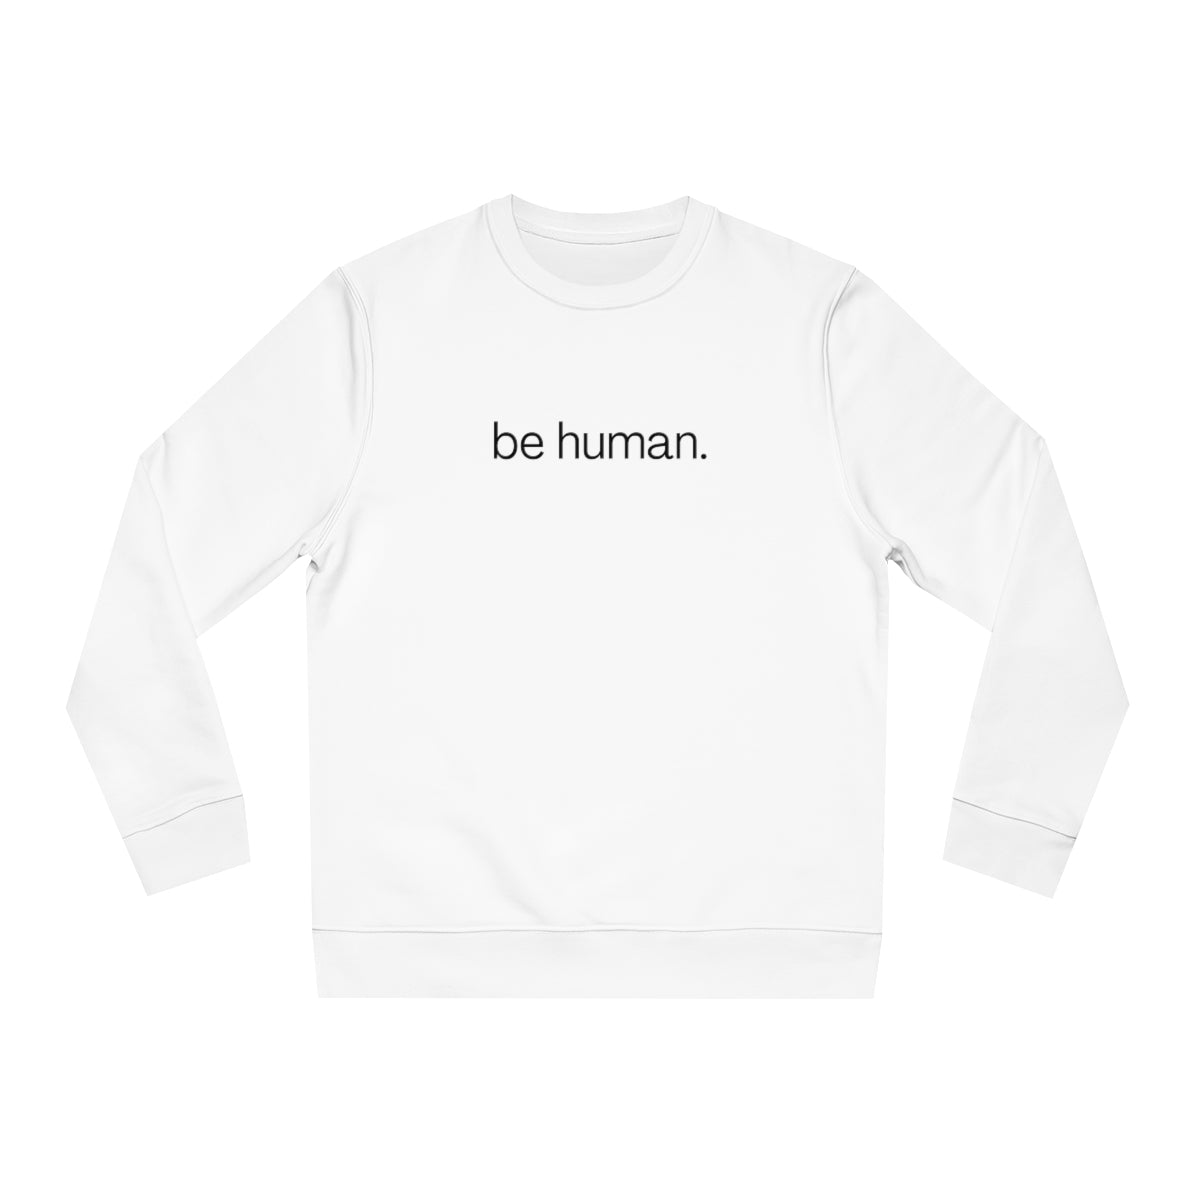 be human. - Unisex Crewneck